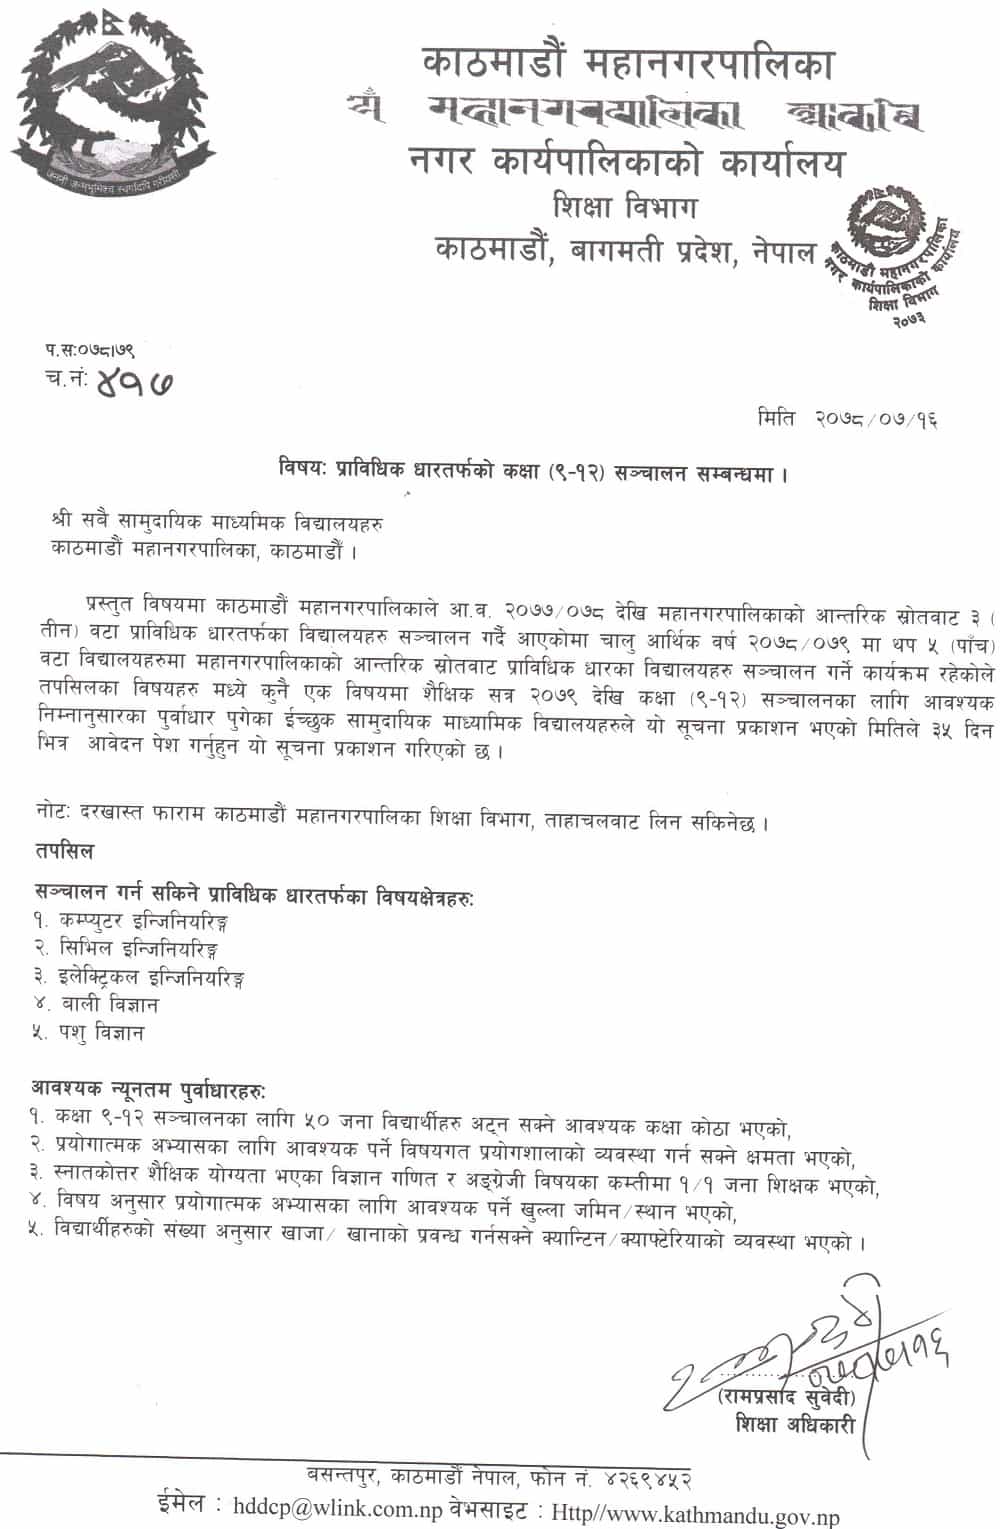 Kathmandu Metropolitan City (KMC) Conducted Various Technical Courses in Community Schools